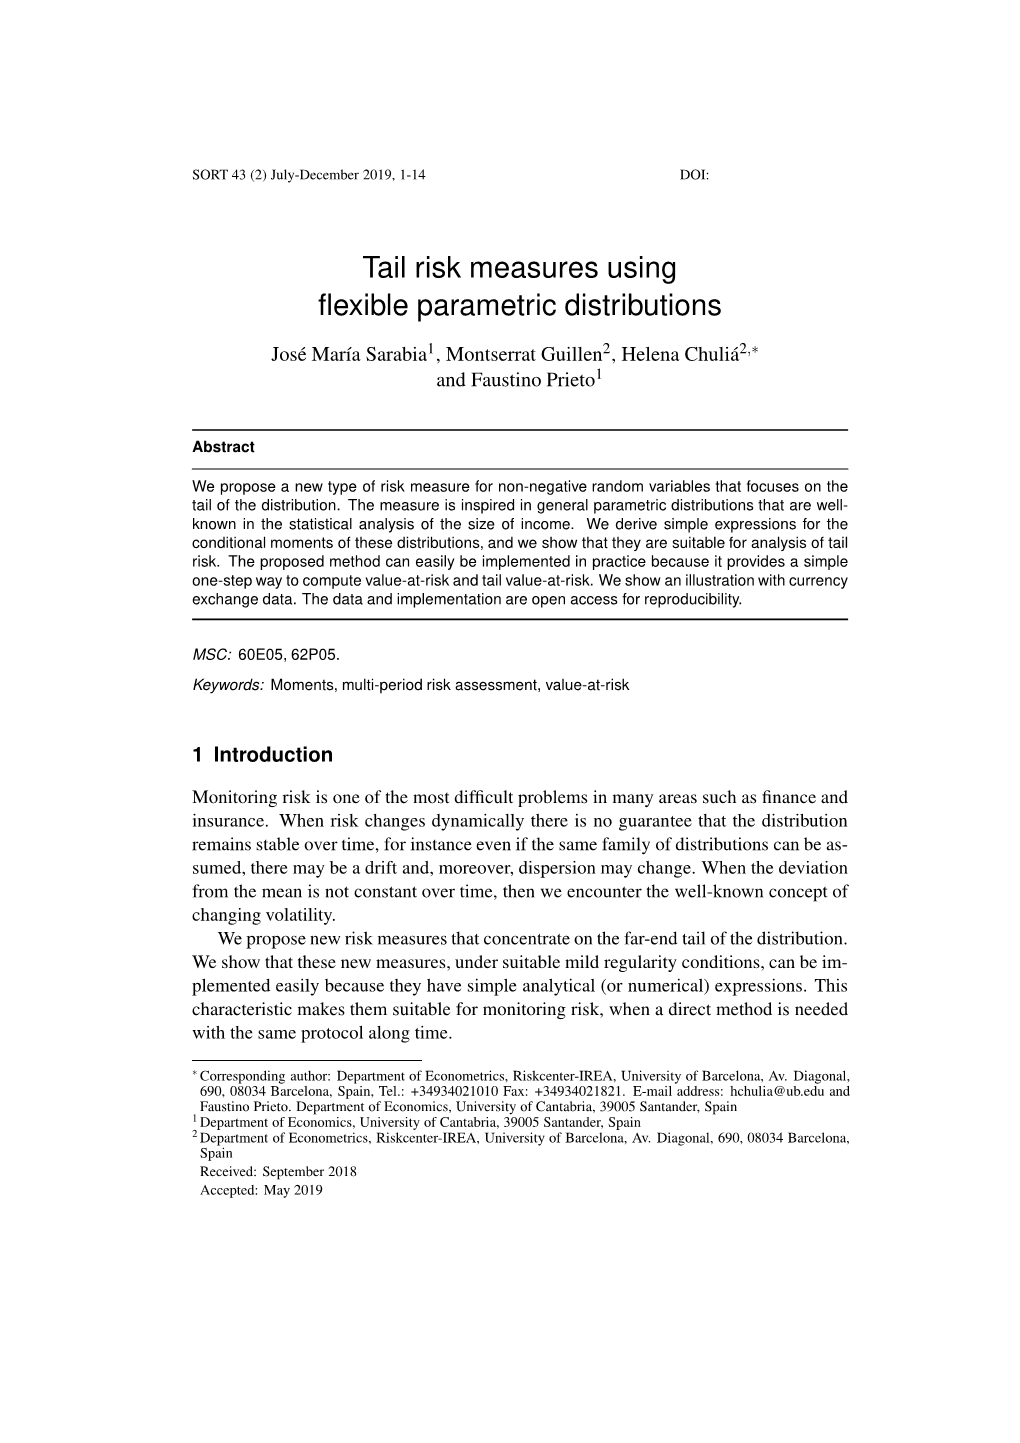 Tail Risk Measures Using Flexible Parametric Distributions